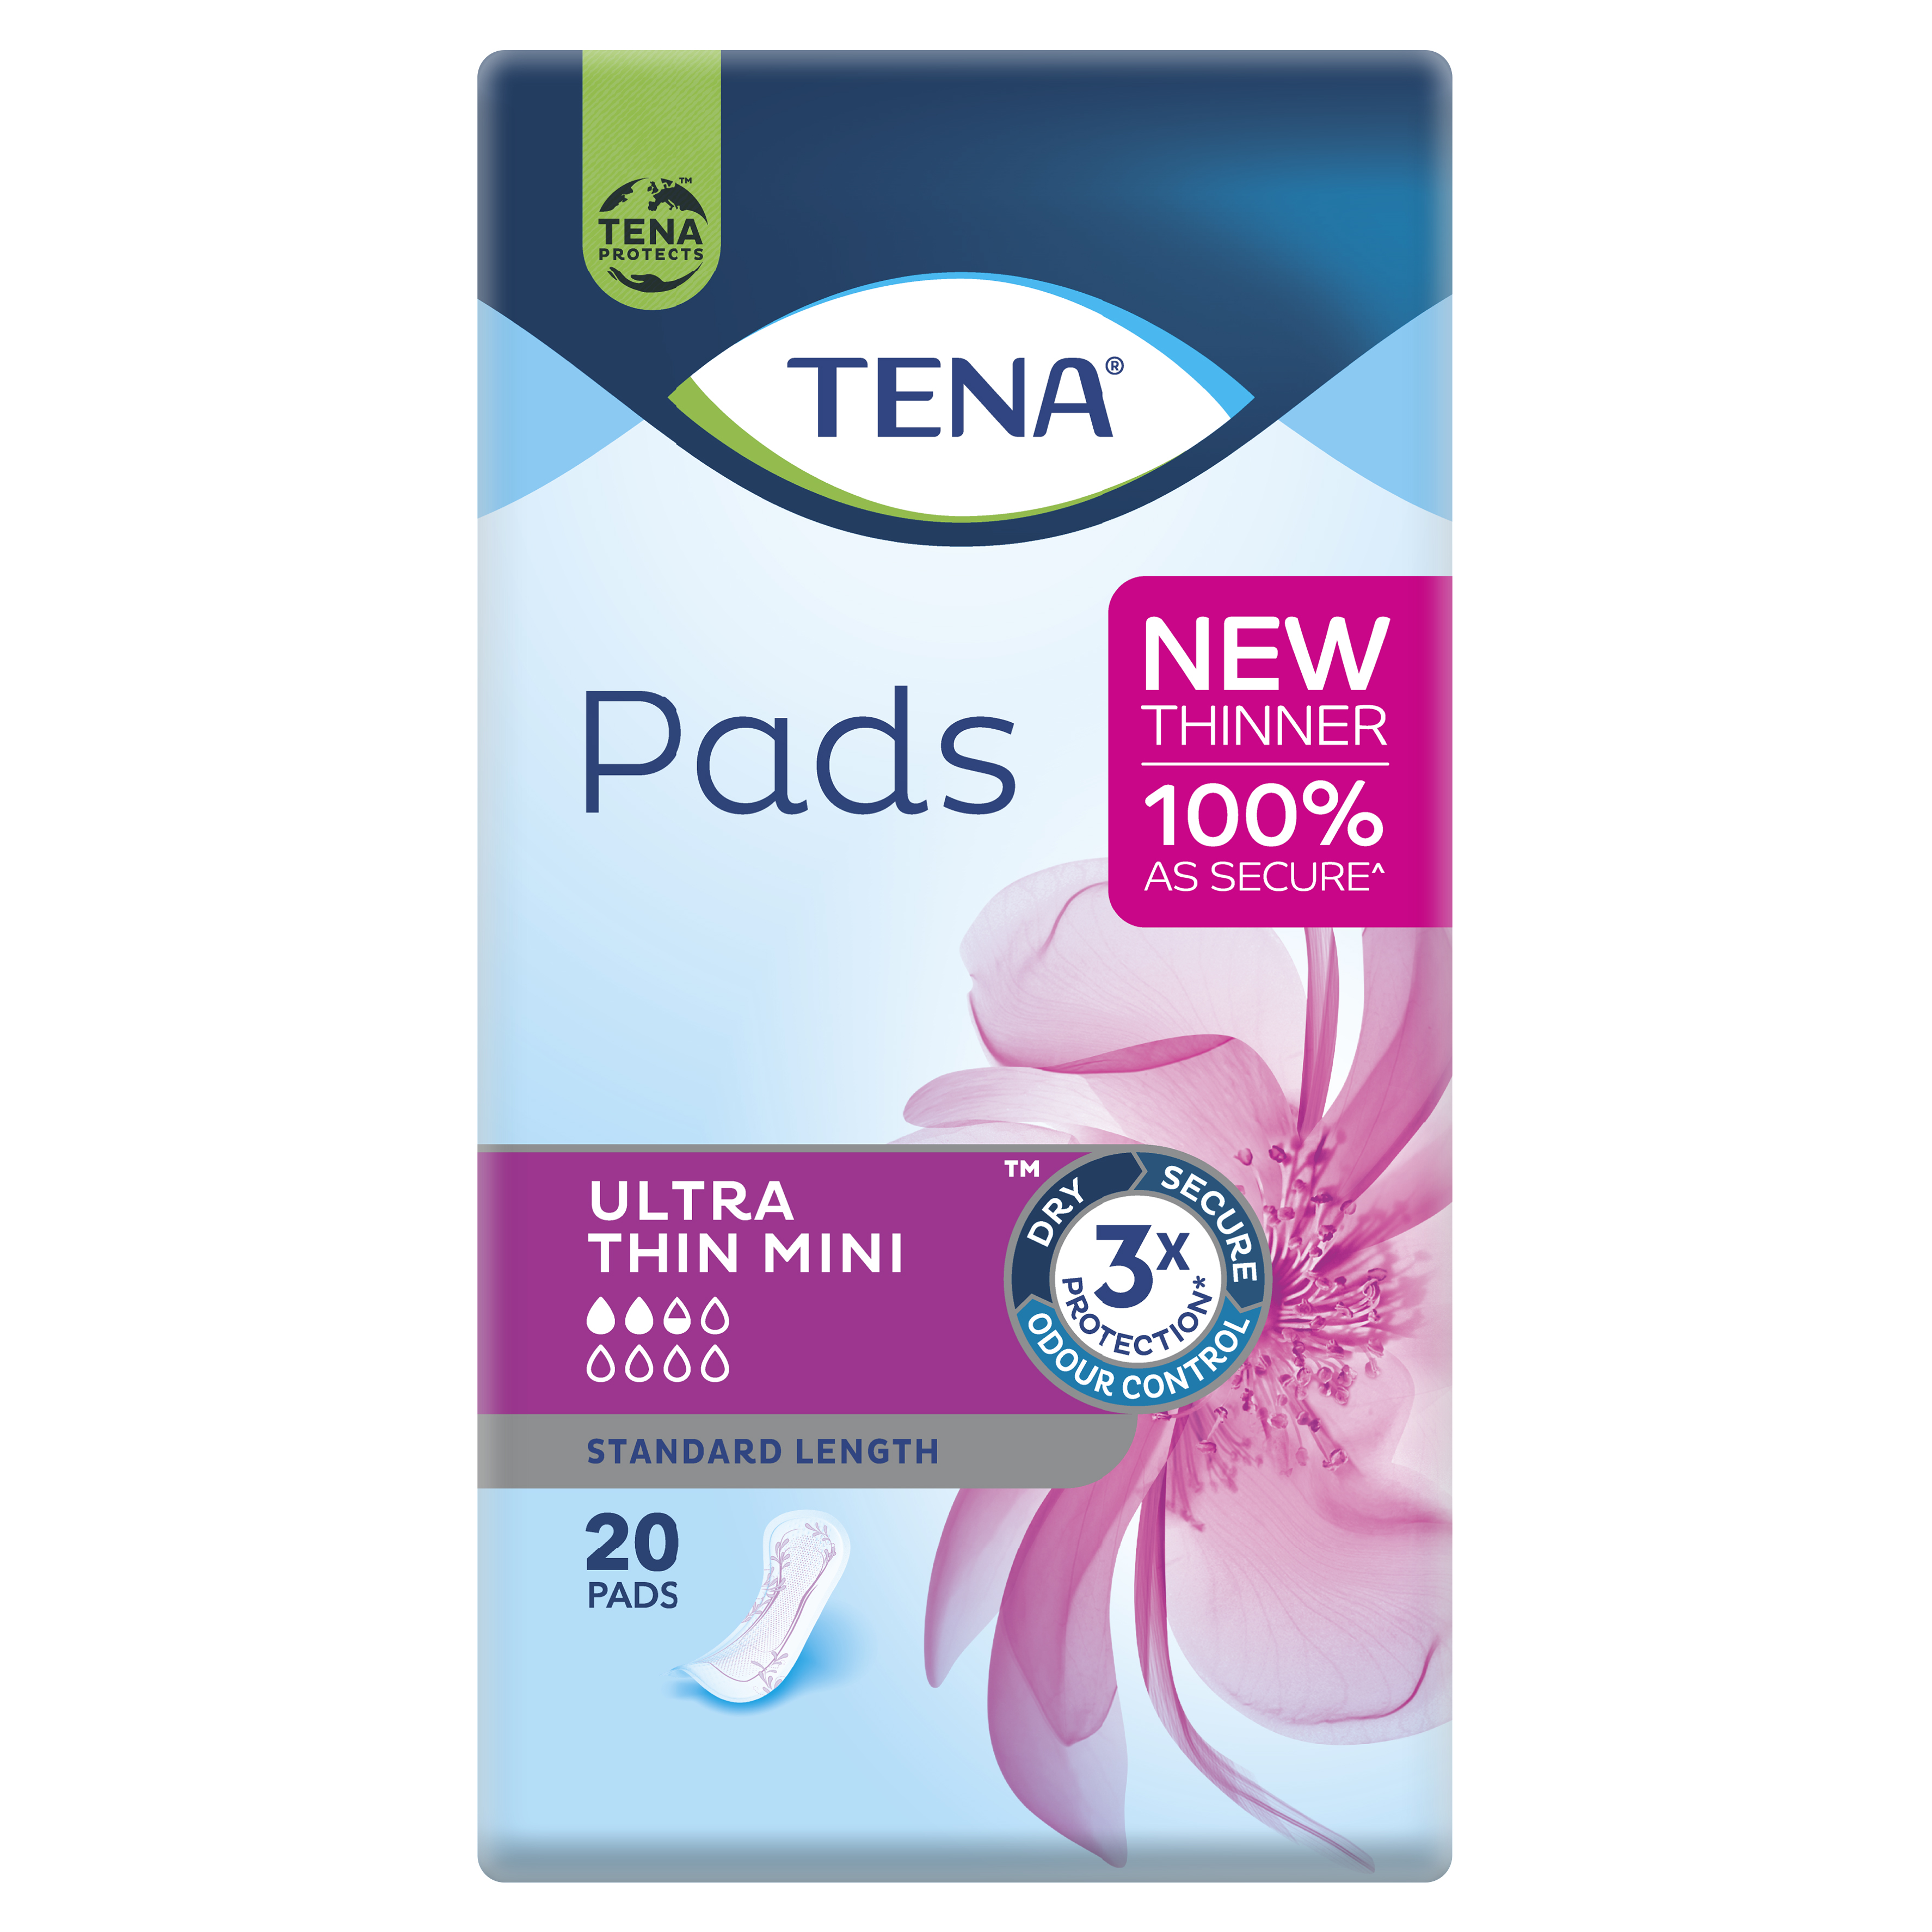 TENA Pads Ultra Thin Mini 20s image 0